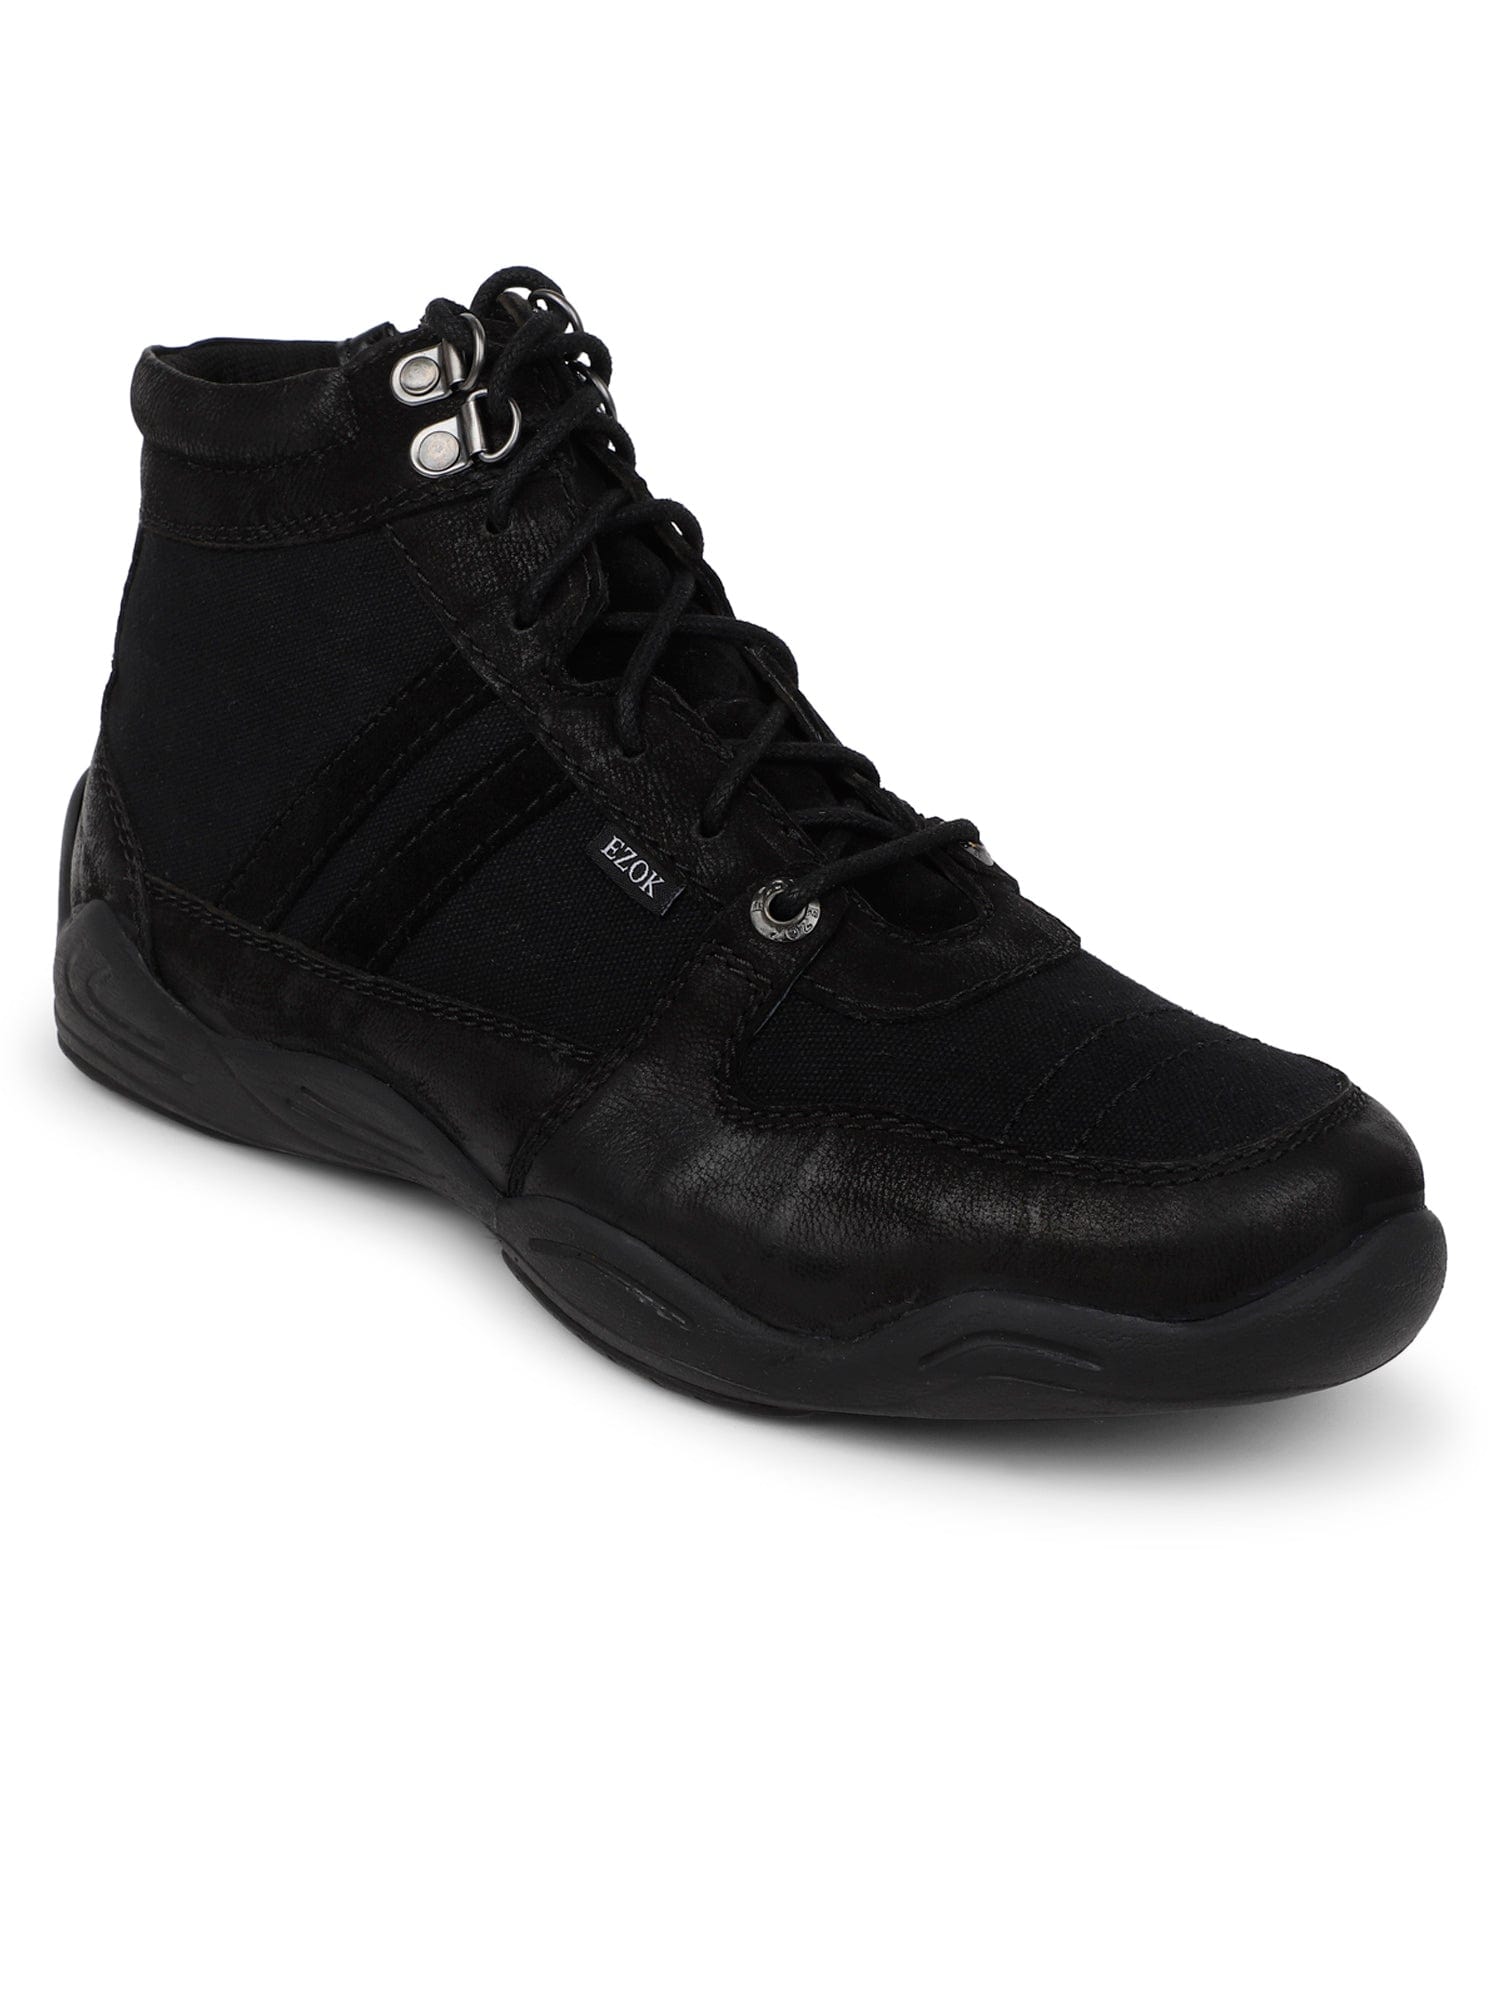 Ezok Black Strech Casual Boots Shoes